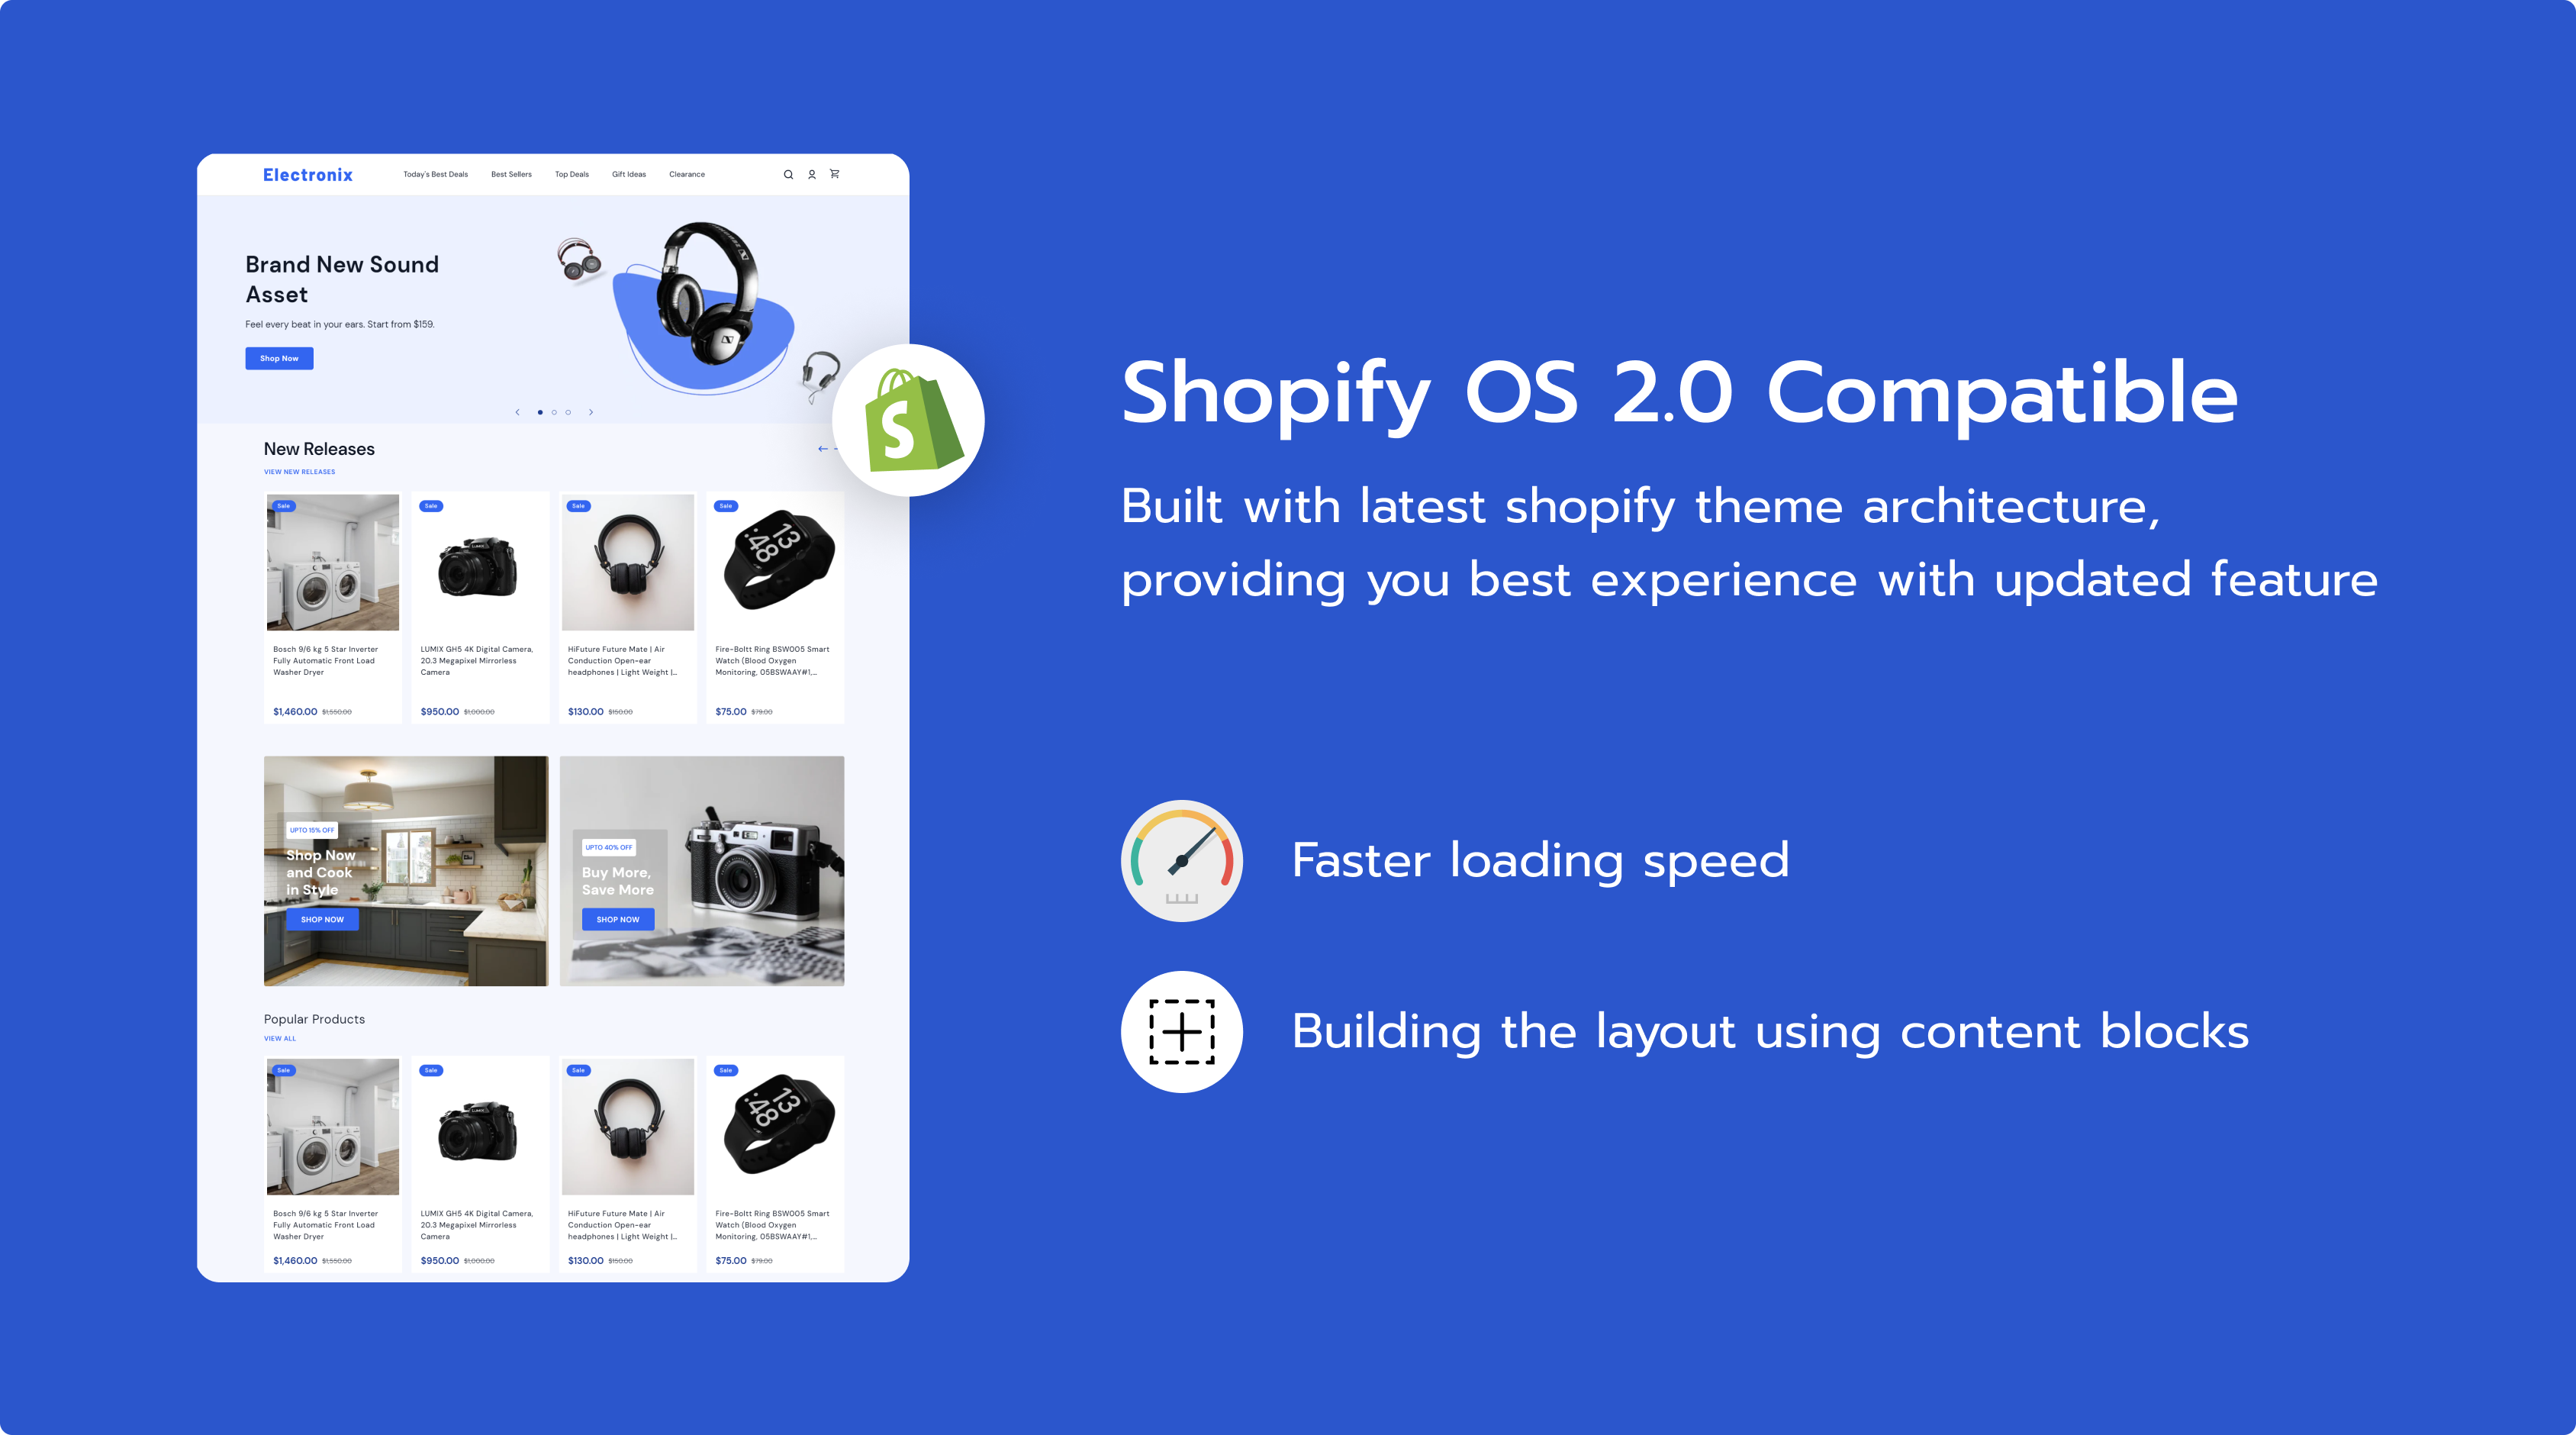 Shopify OS 2.0